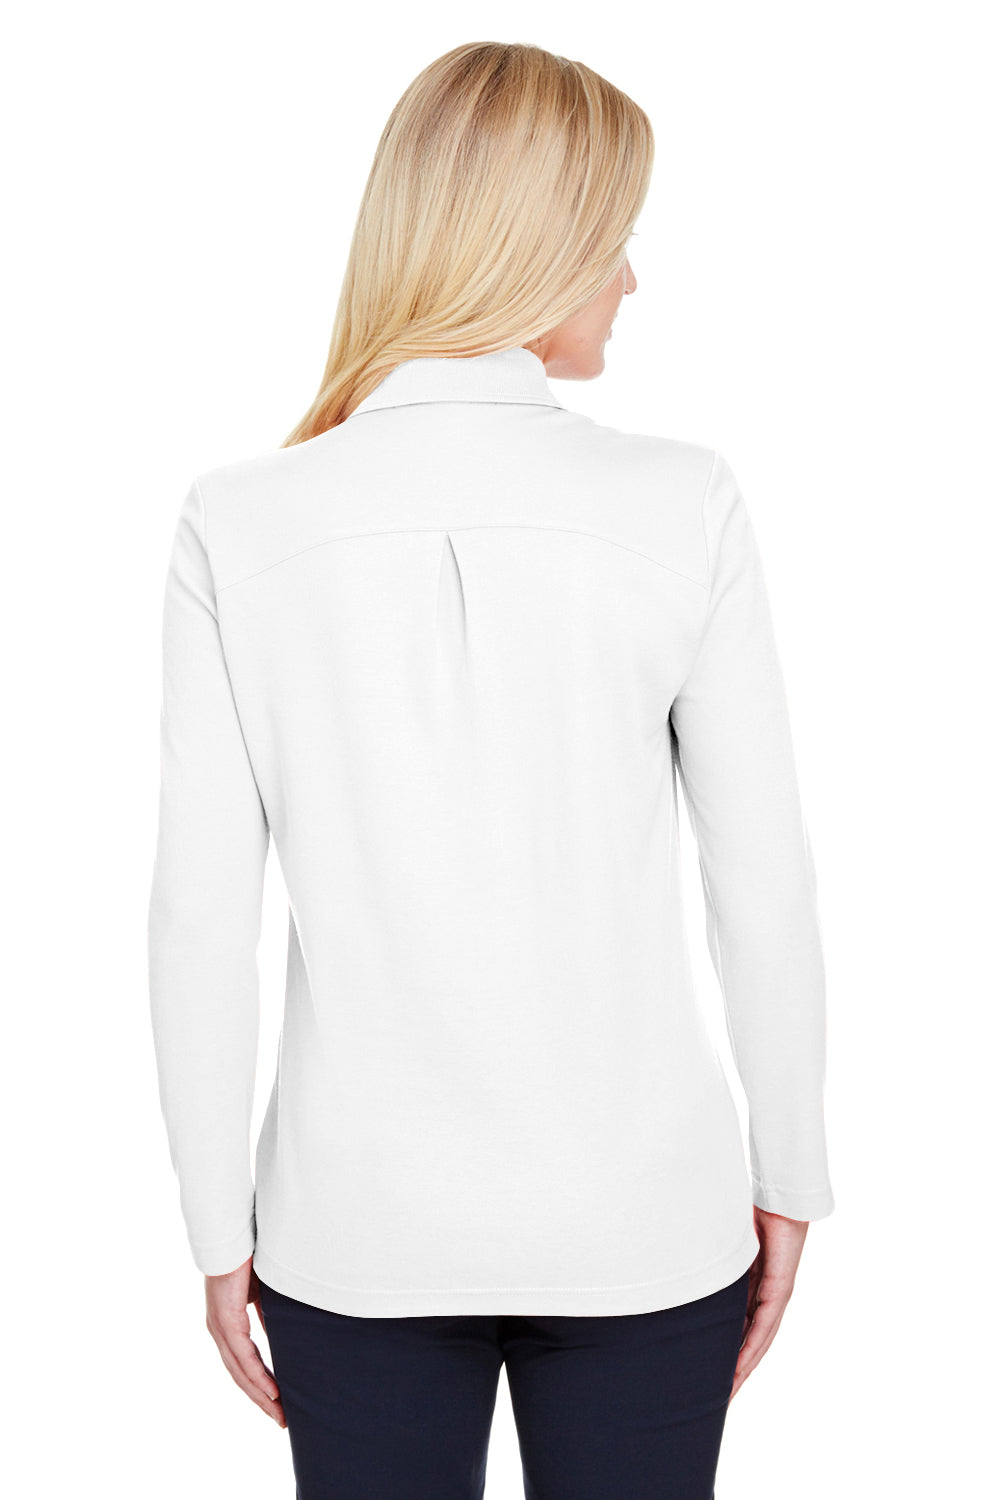 Devon & Jones DG20LW Womens CrownLux Performance Moisture Wicking Long Sleeve Polo Shirt White Back